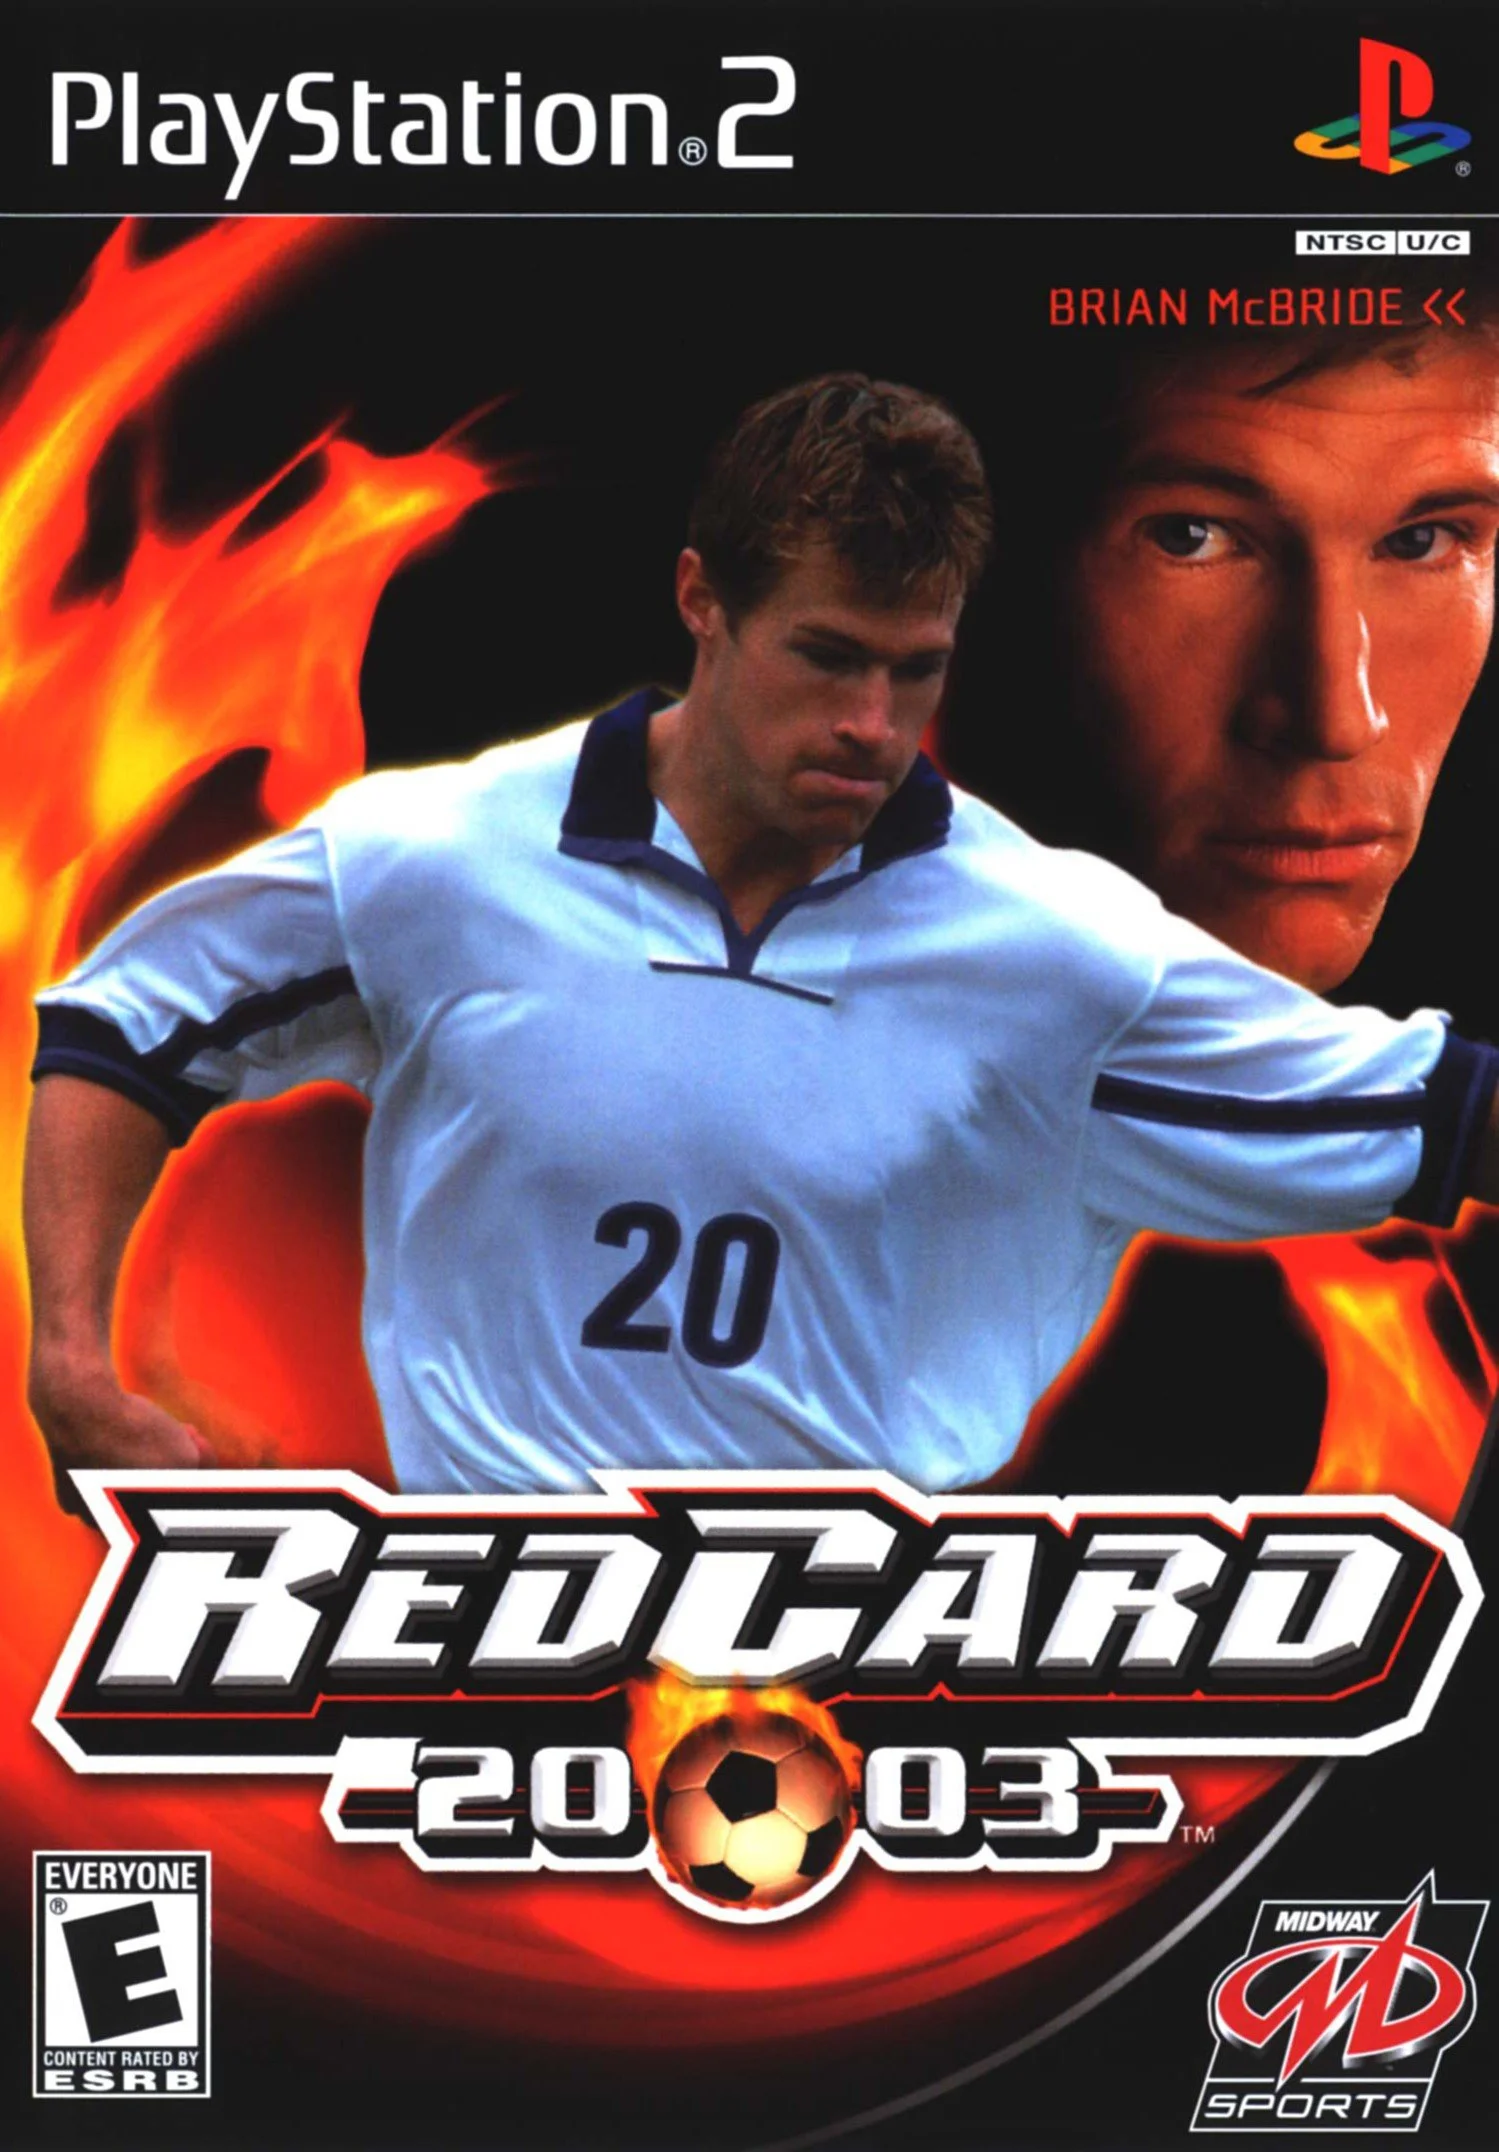 RedCard 20-03